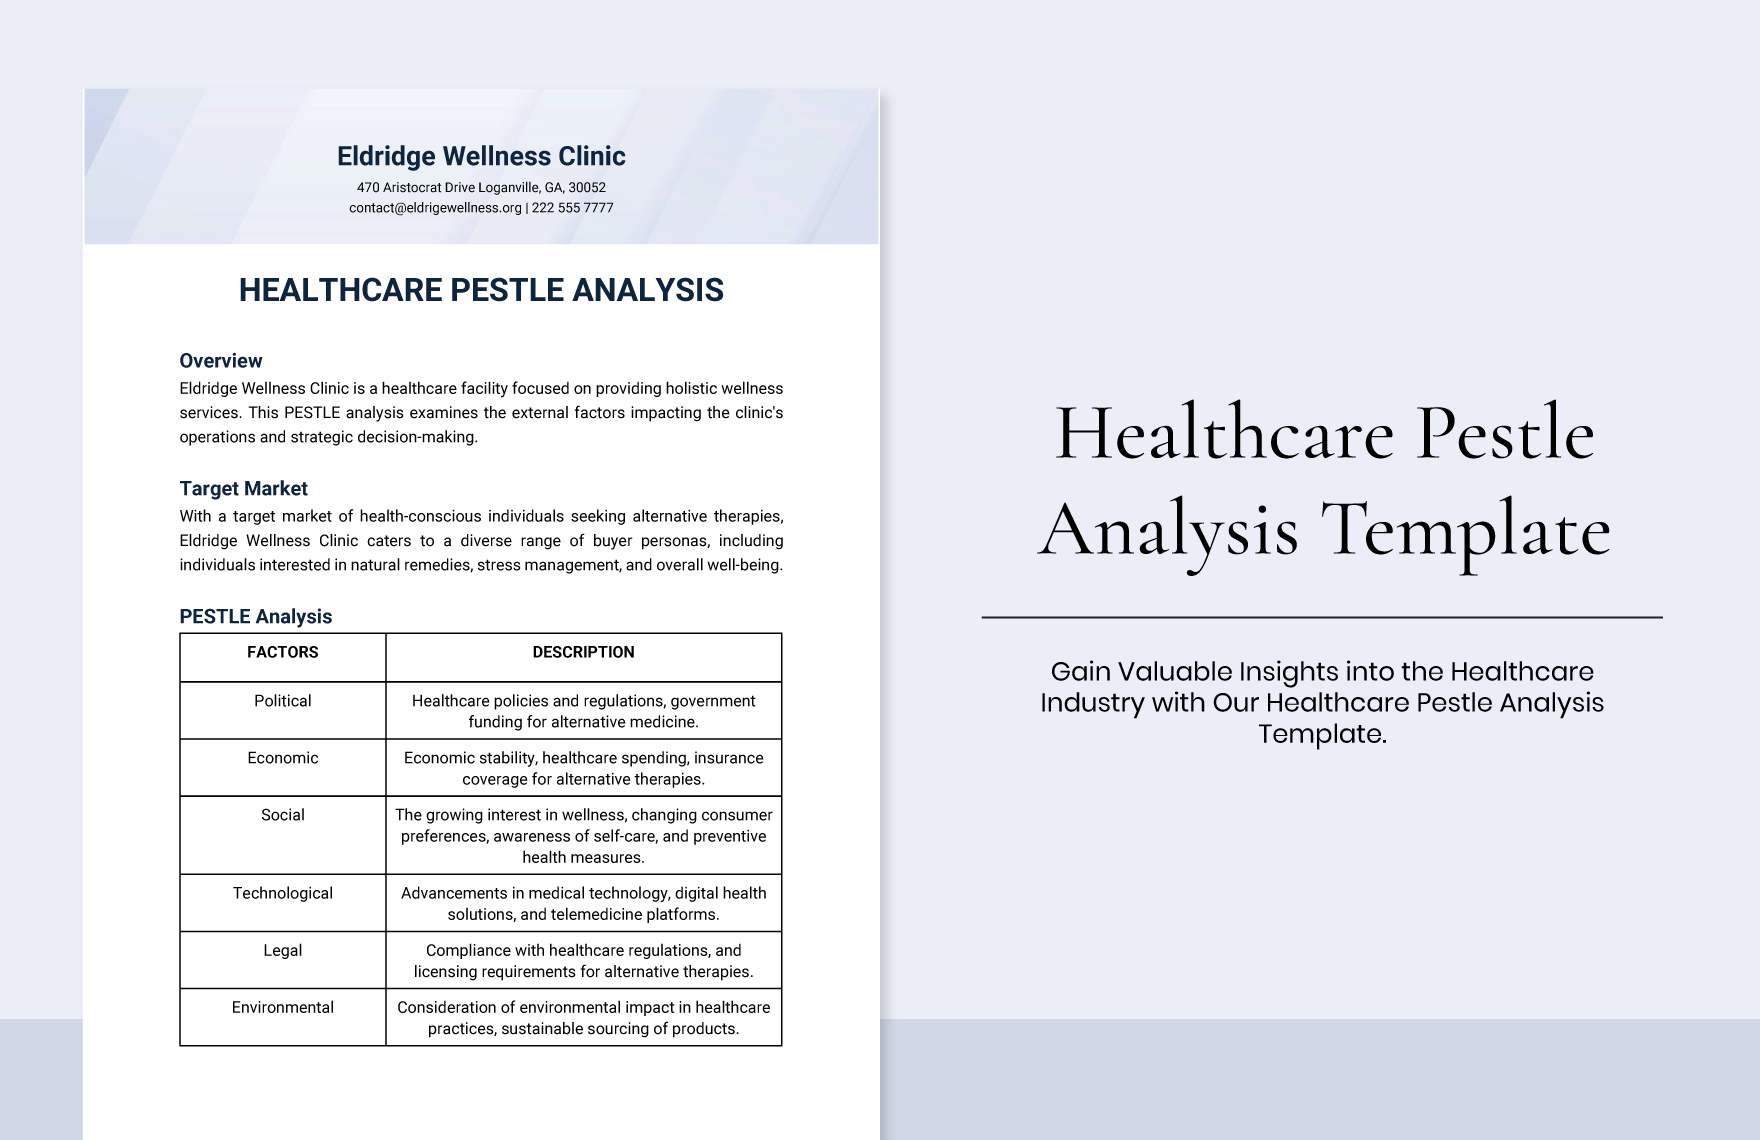 Healthcare Pestle Analysis Template